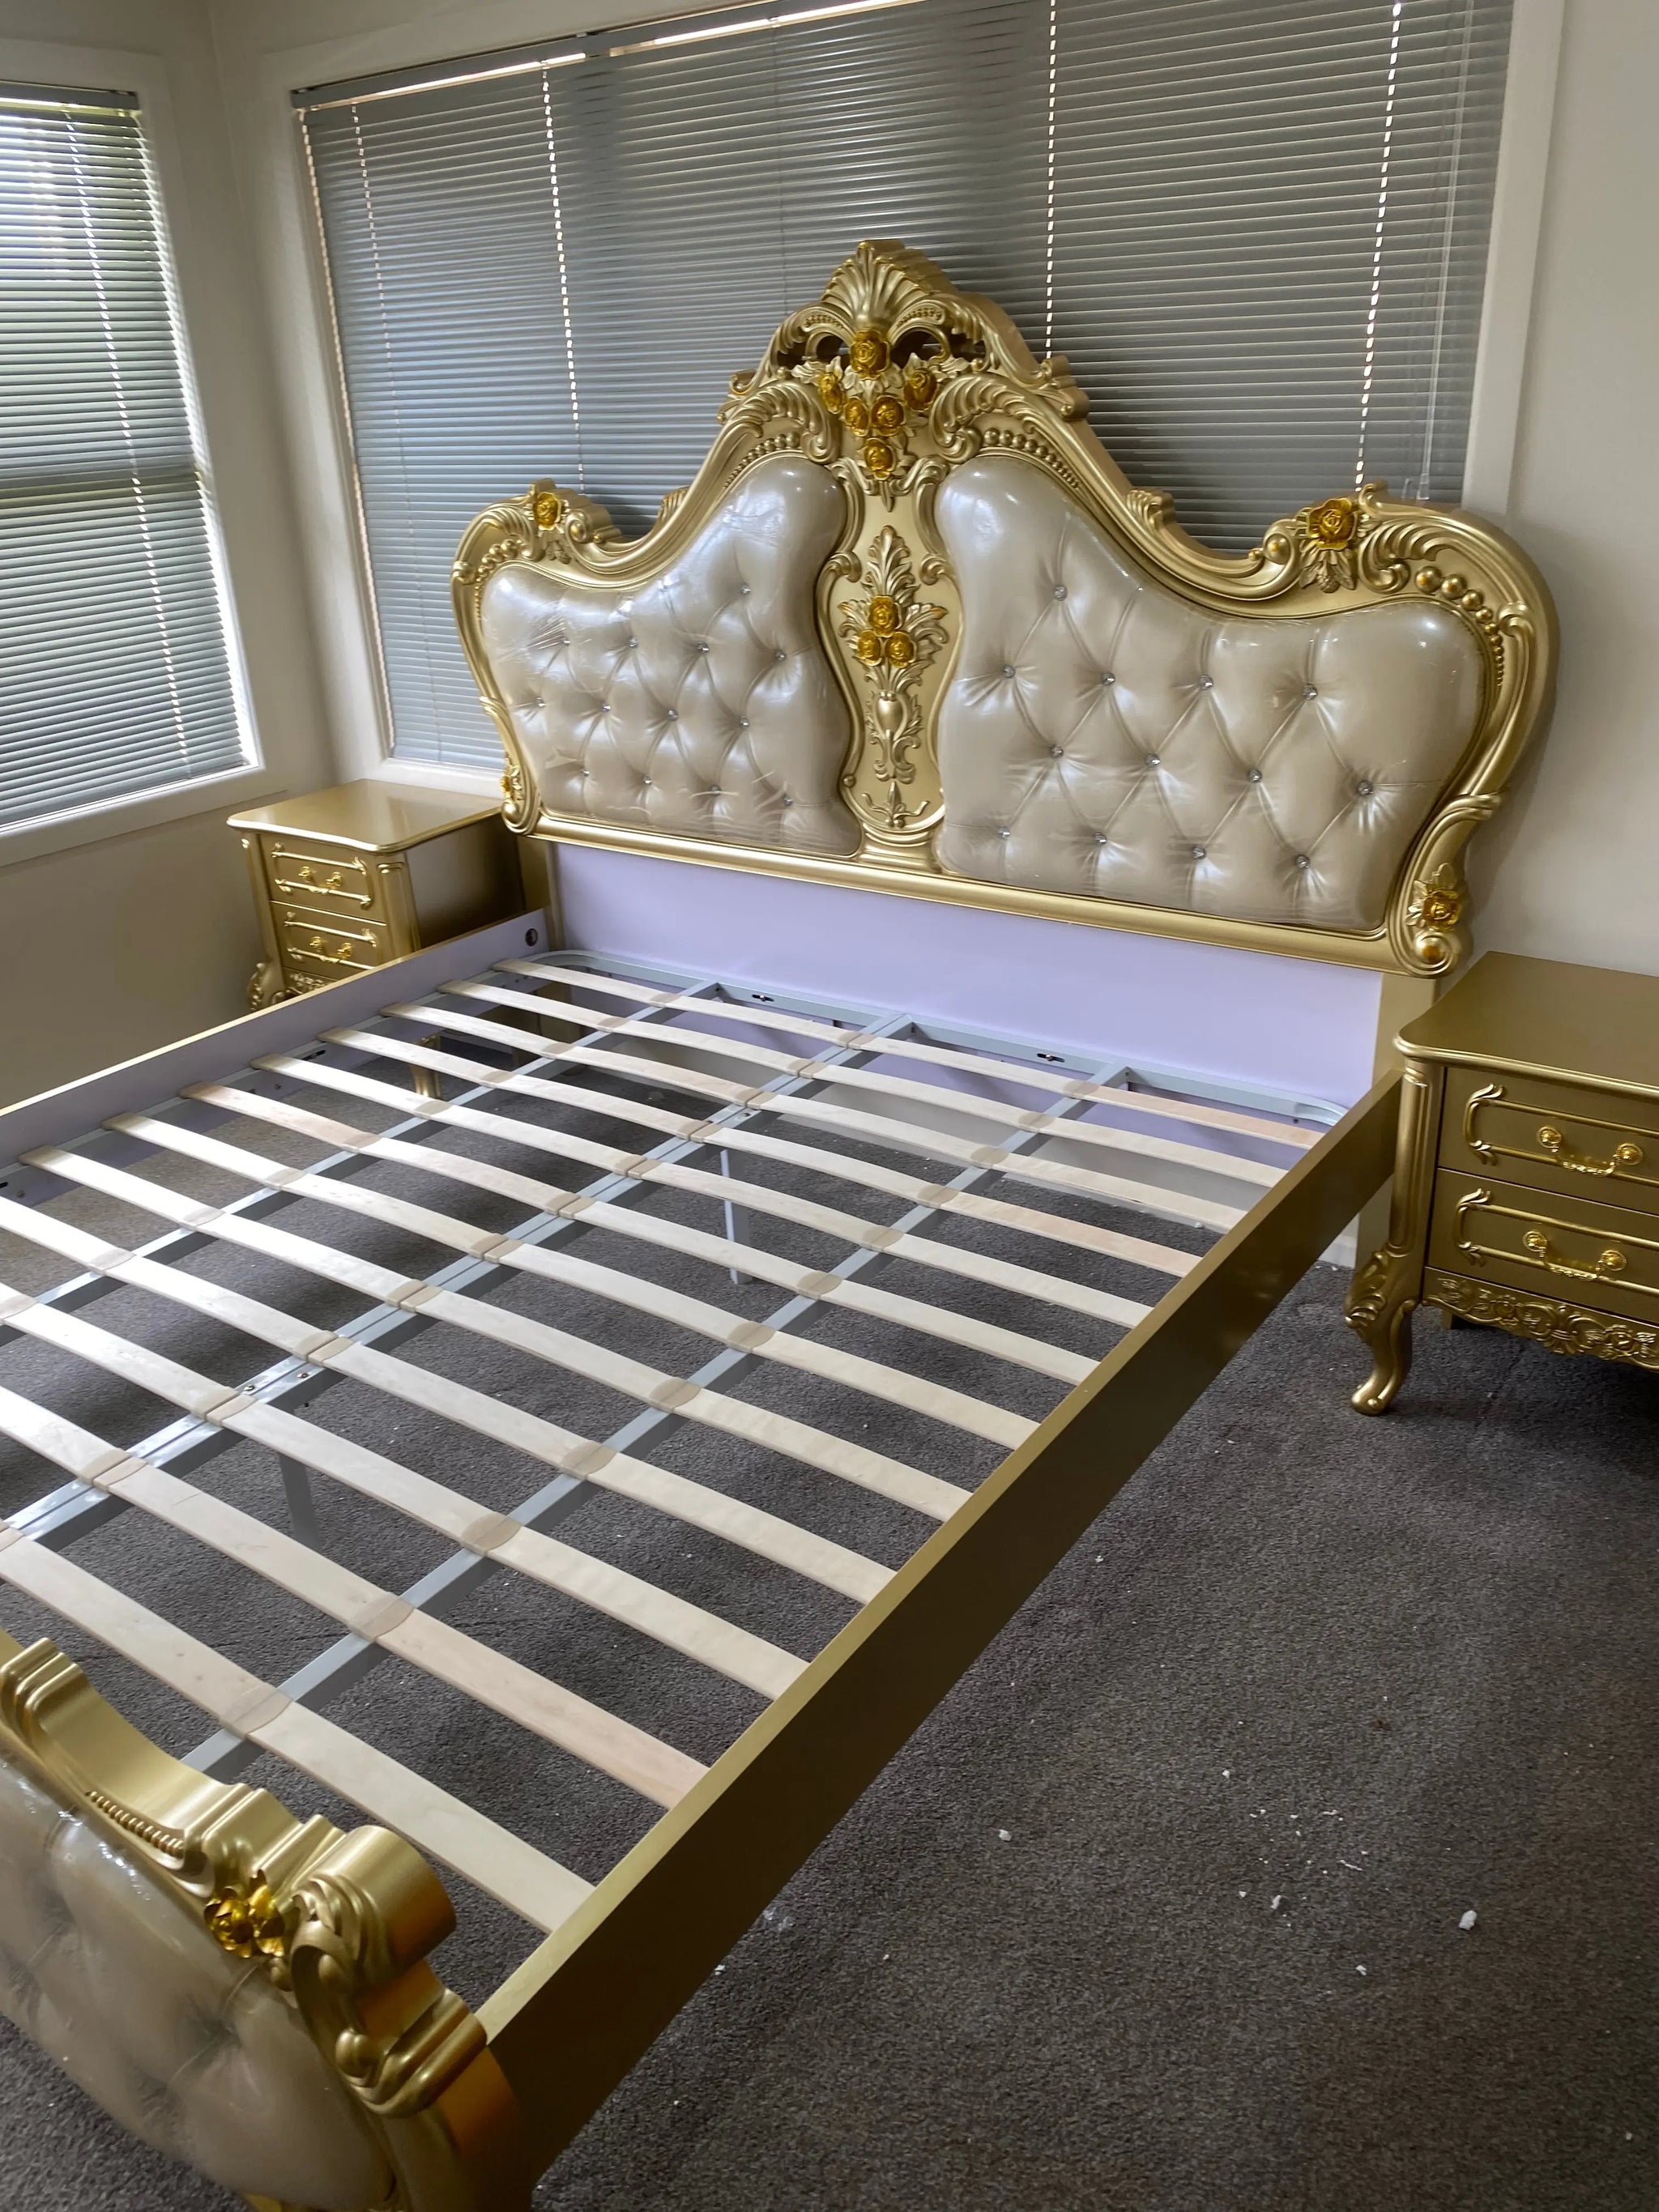 3058 - Luxury Gold Frame Royal 7 Pieces Bedroom Set - Super Outlets